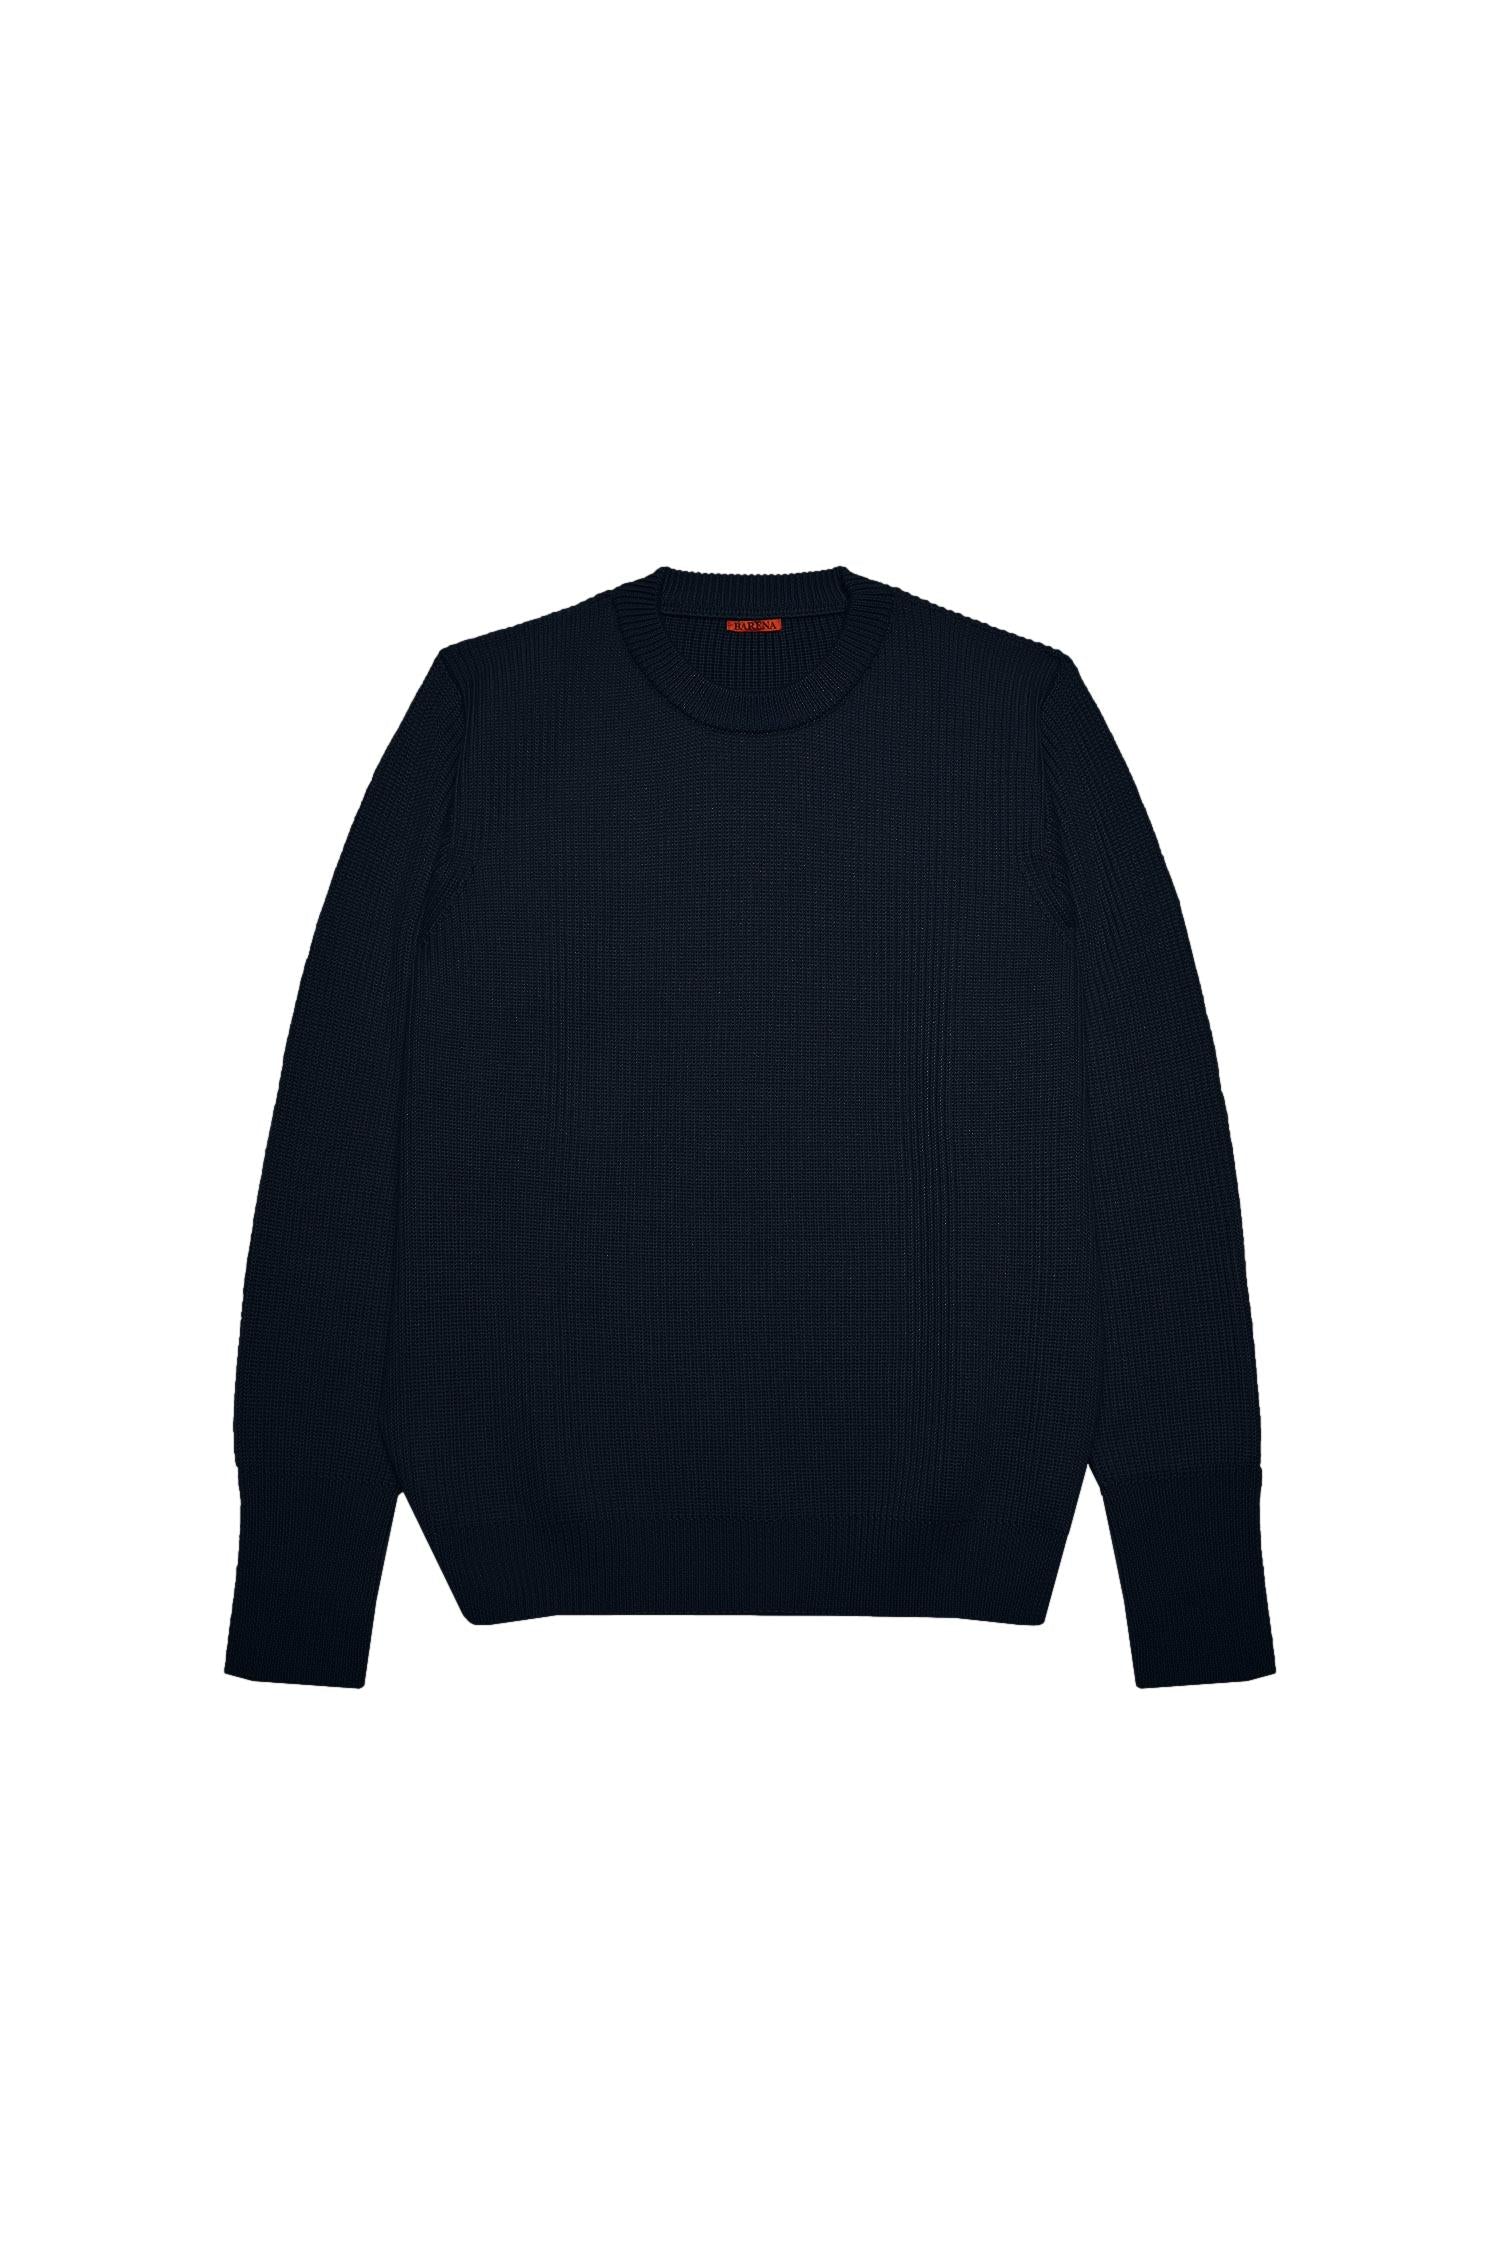 Barena Venezia Sweater Corba Cruna Genser- Mørkeblå - [shop.name]